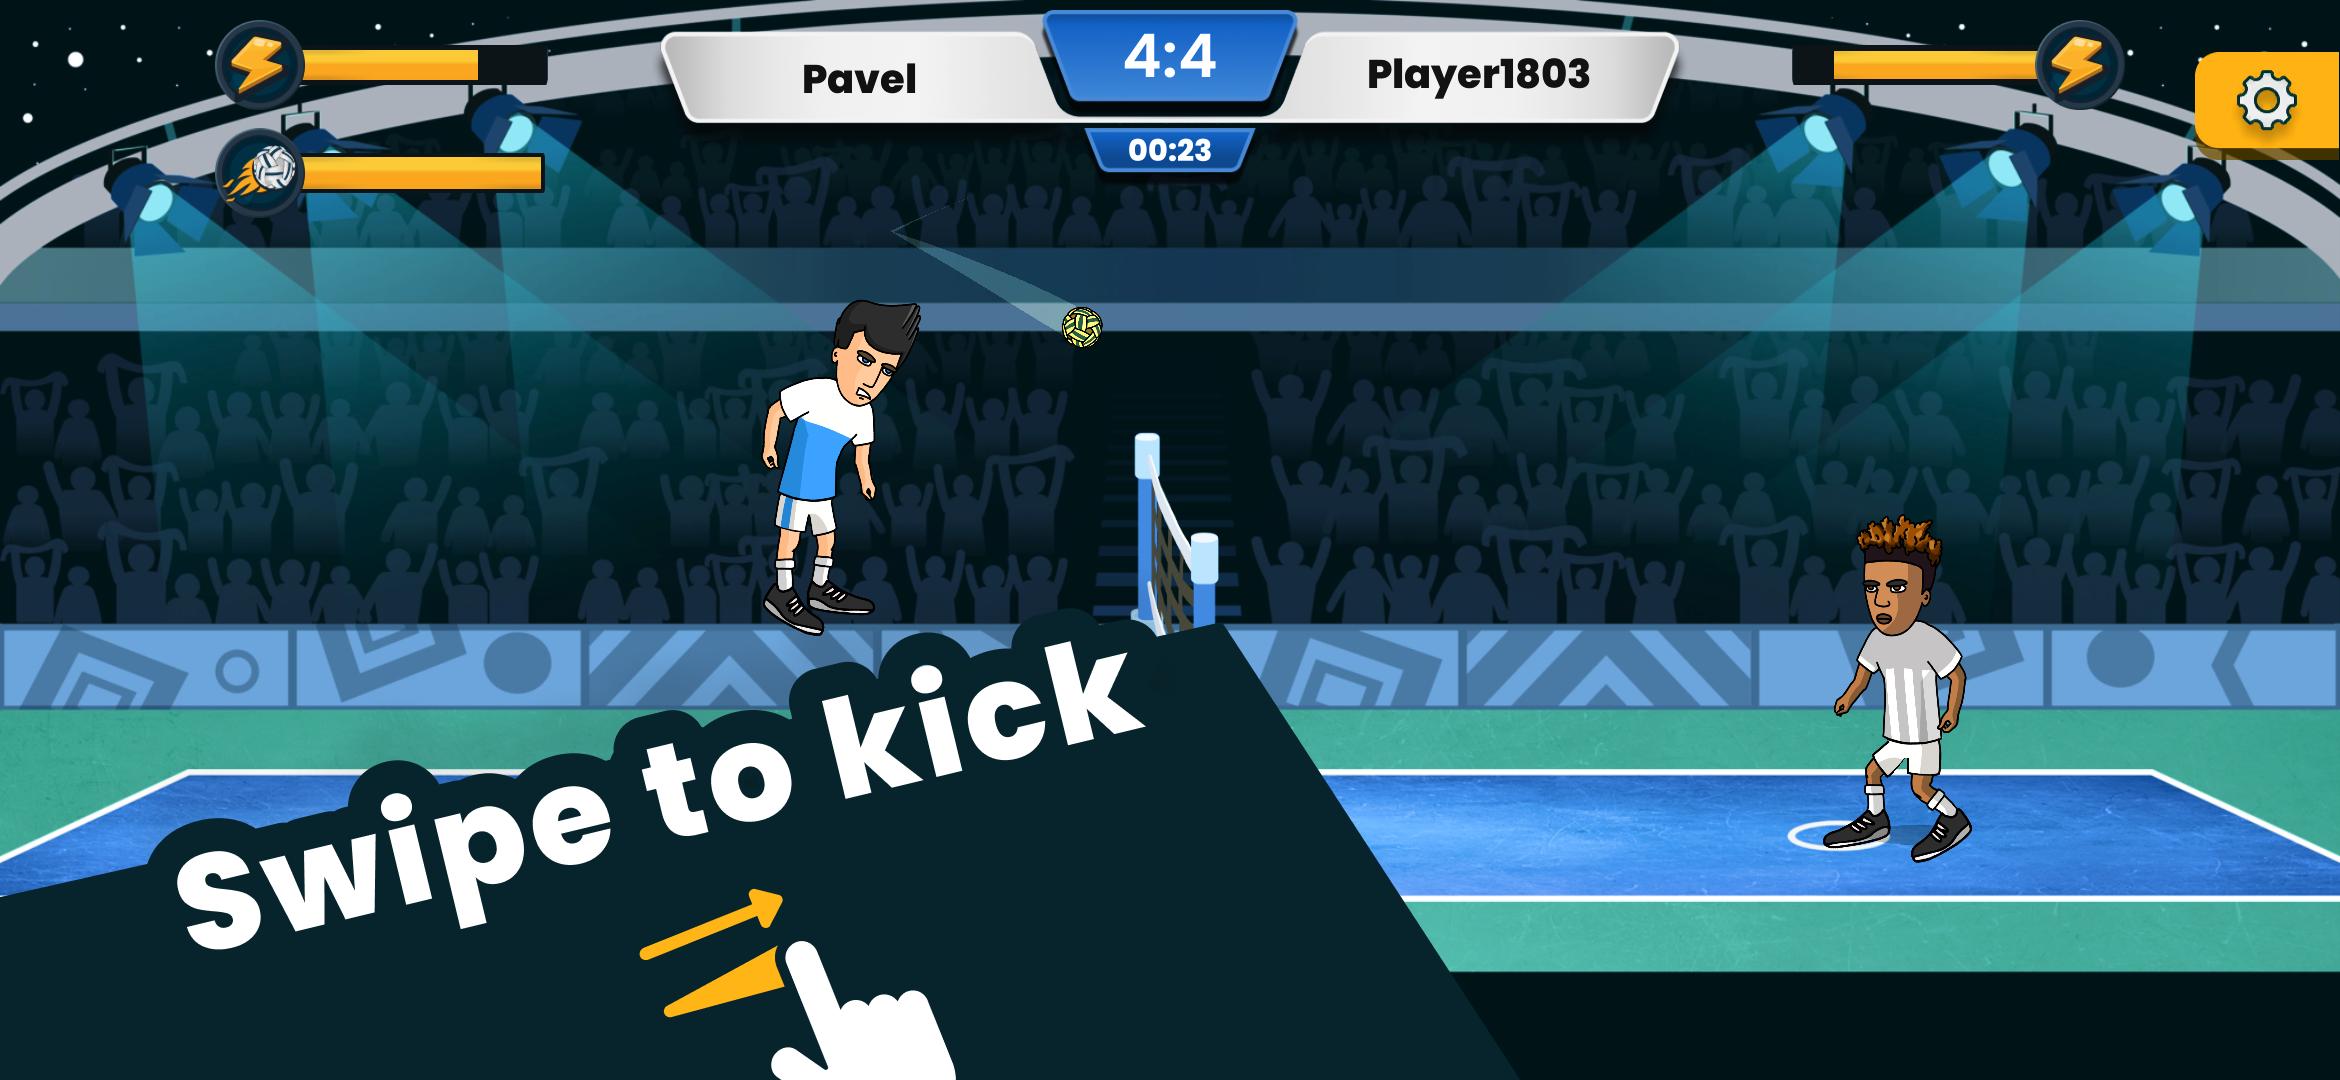 Sepak soccer: street challenge sports game 0.41.3 Screenshot 11